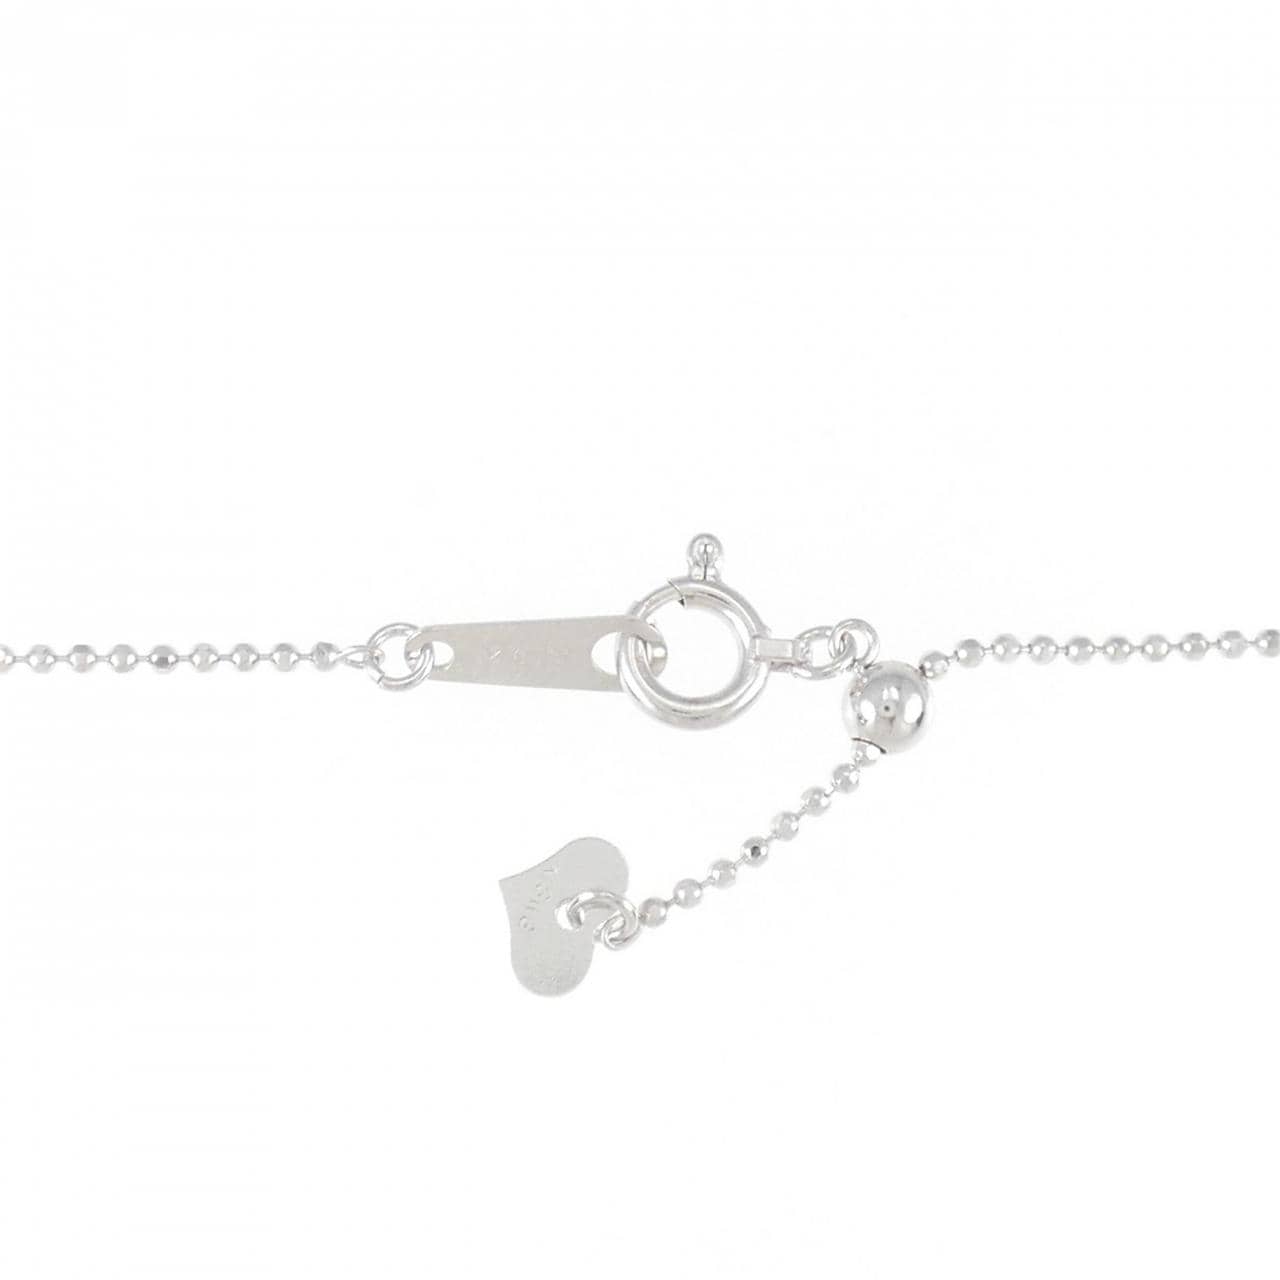 K18WG Clover Diamond Necklace 0.22CT